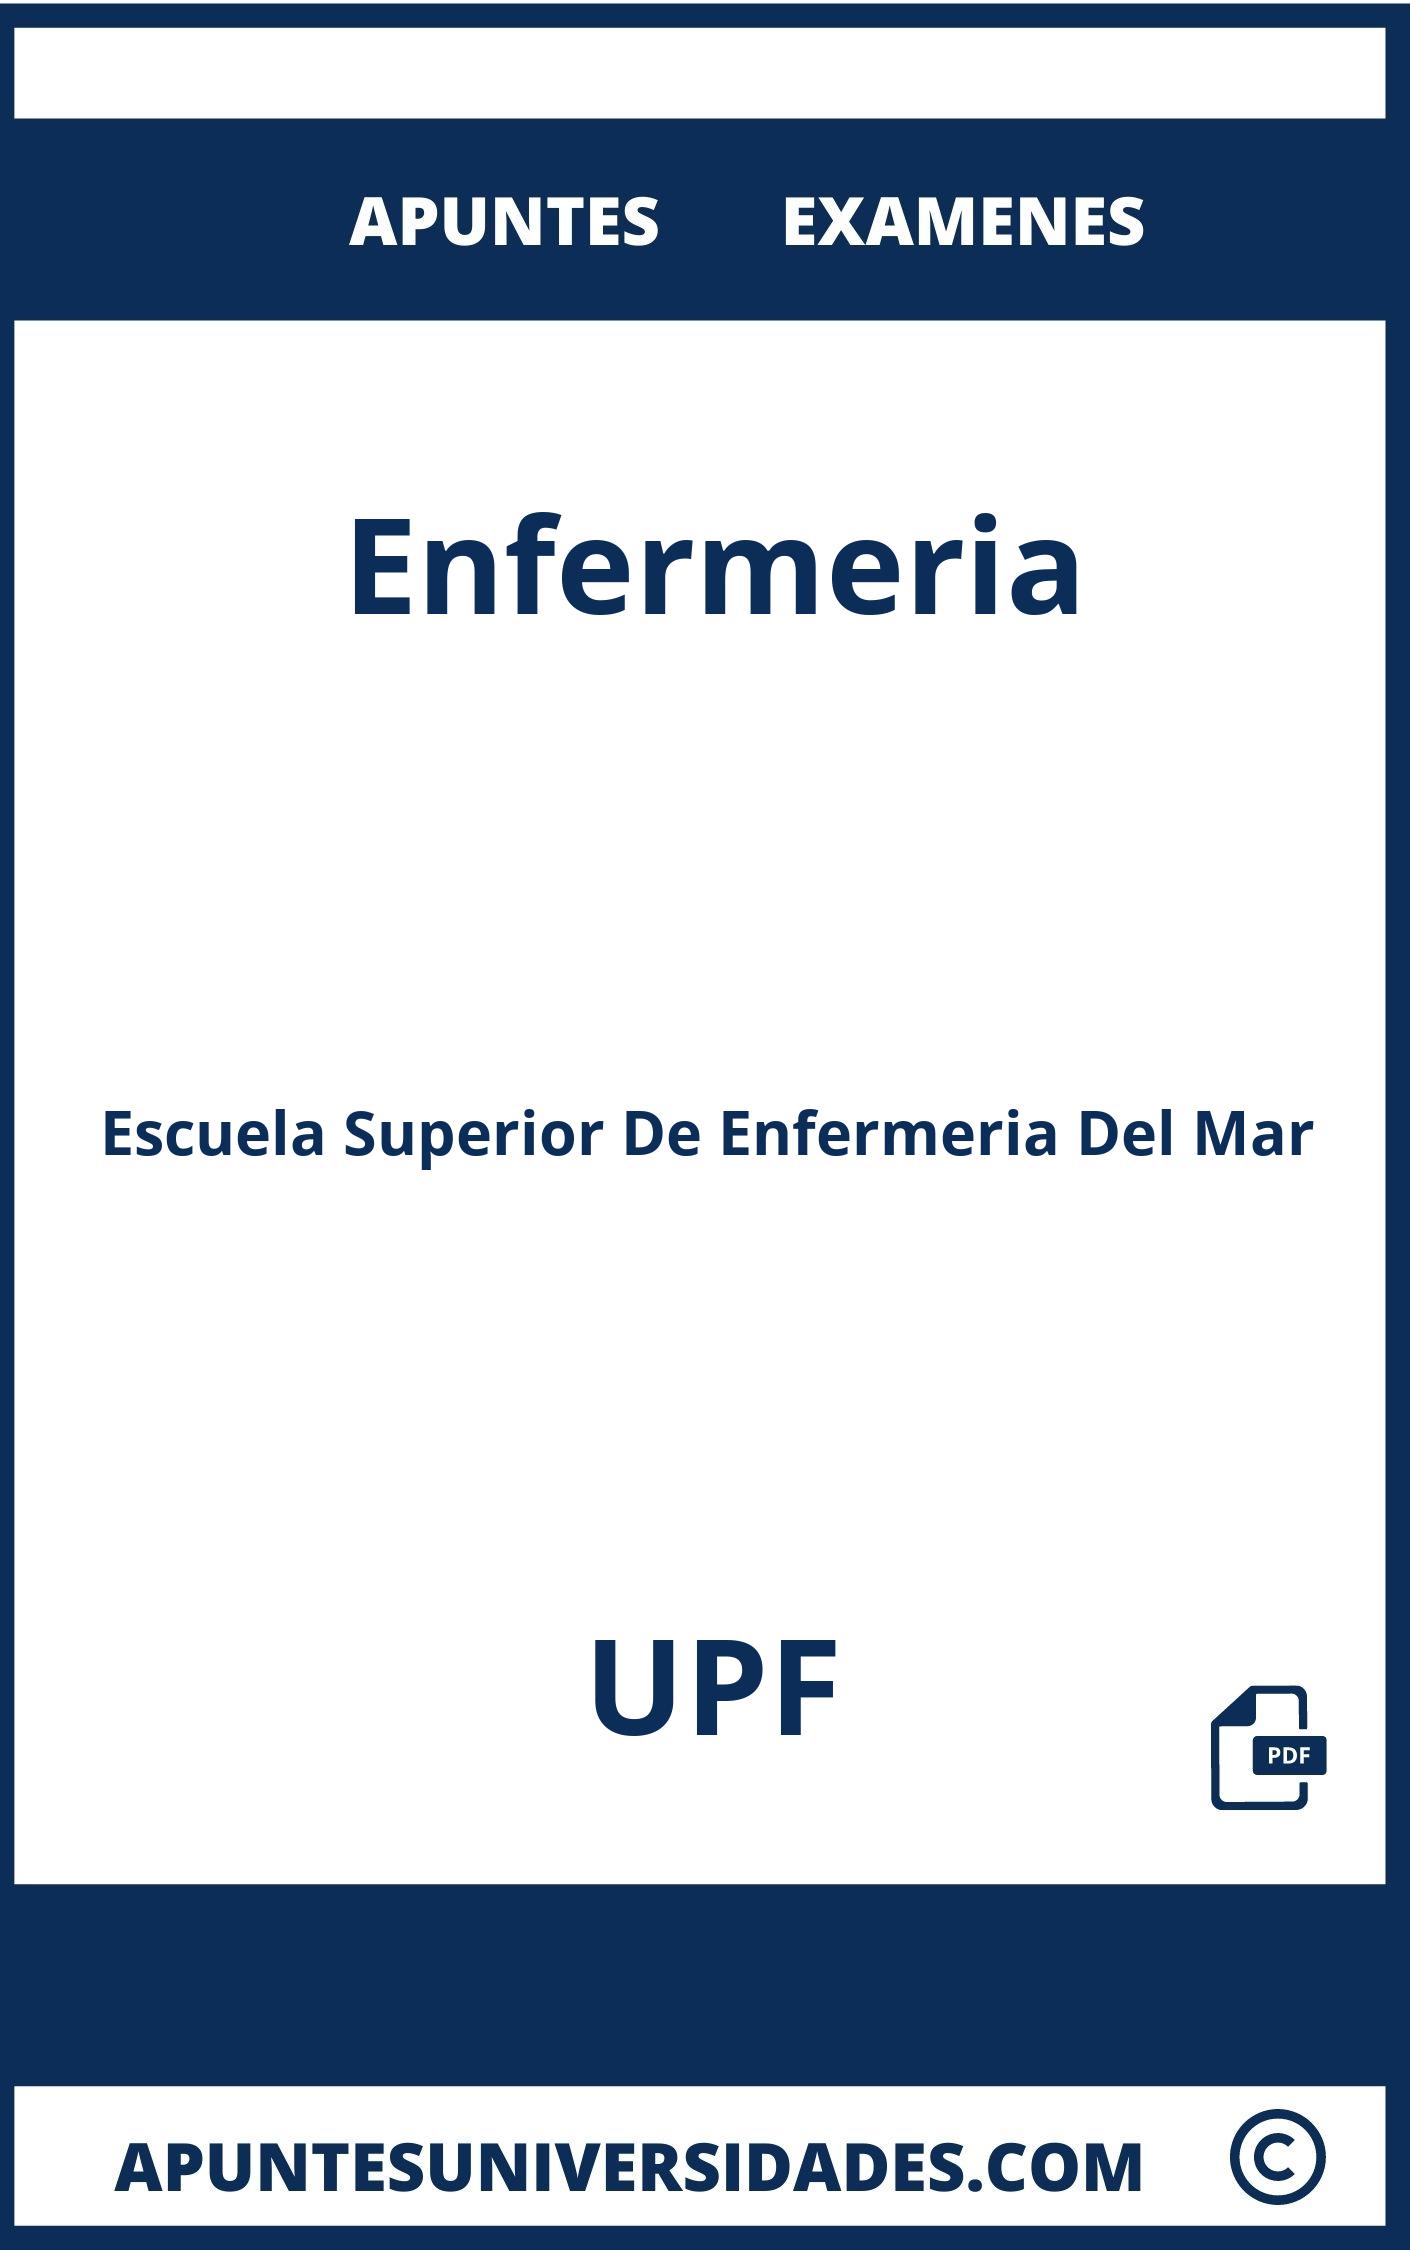 Apuntes Examenes Enfermeria UPF